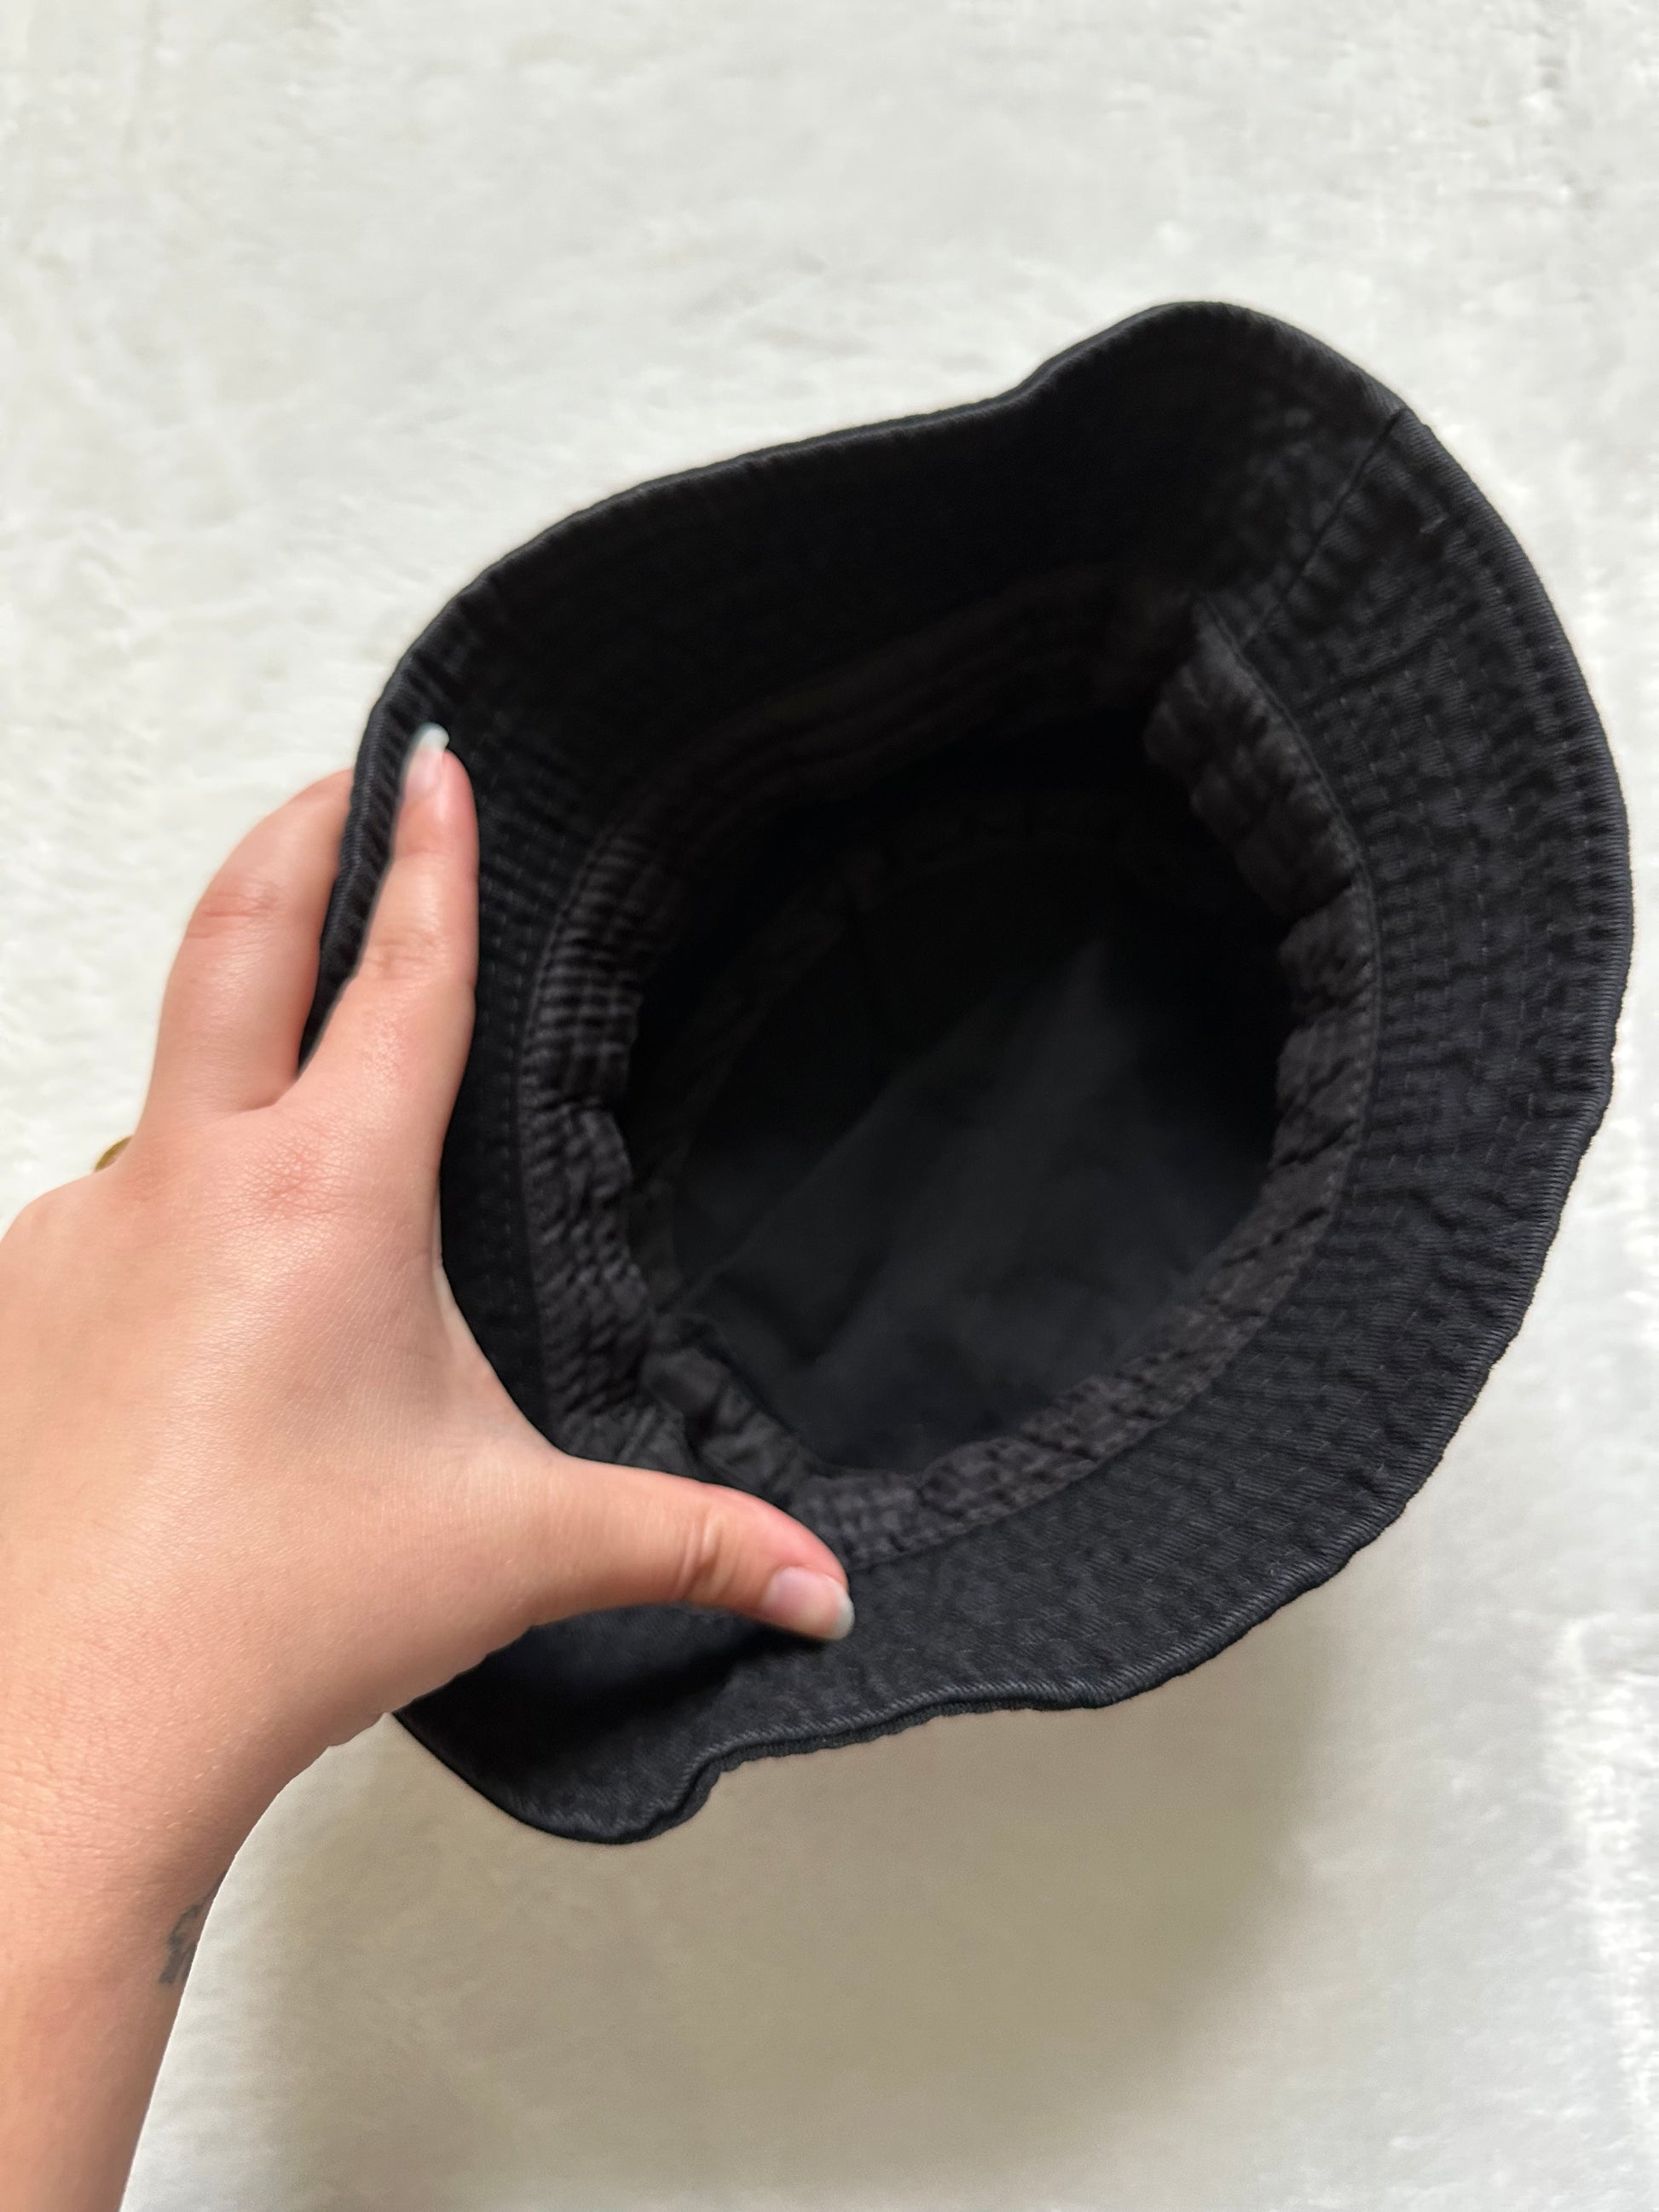 Miami Heat Bucket Hat - Better World Thrift